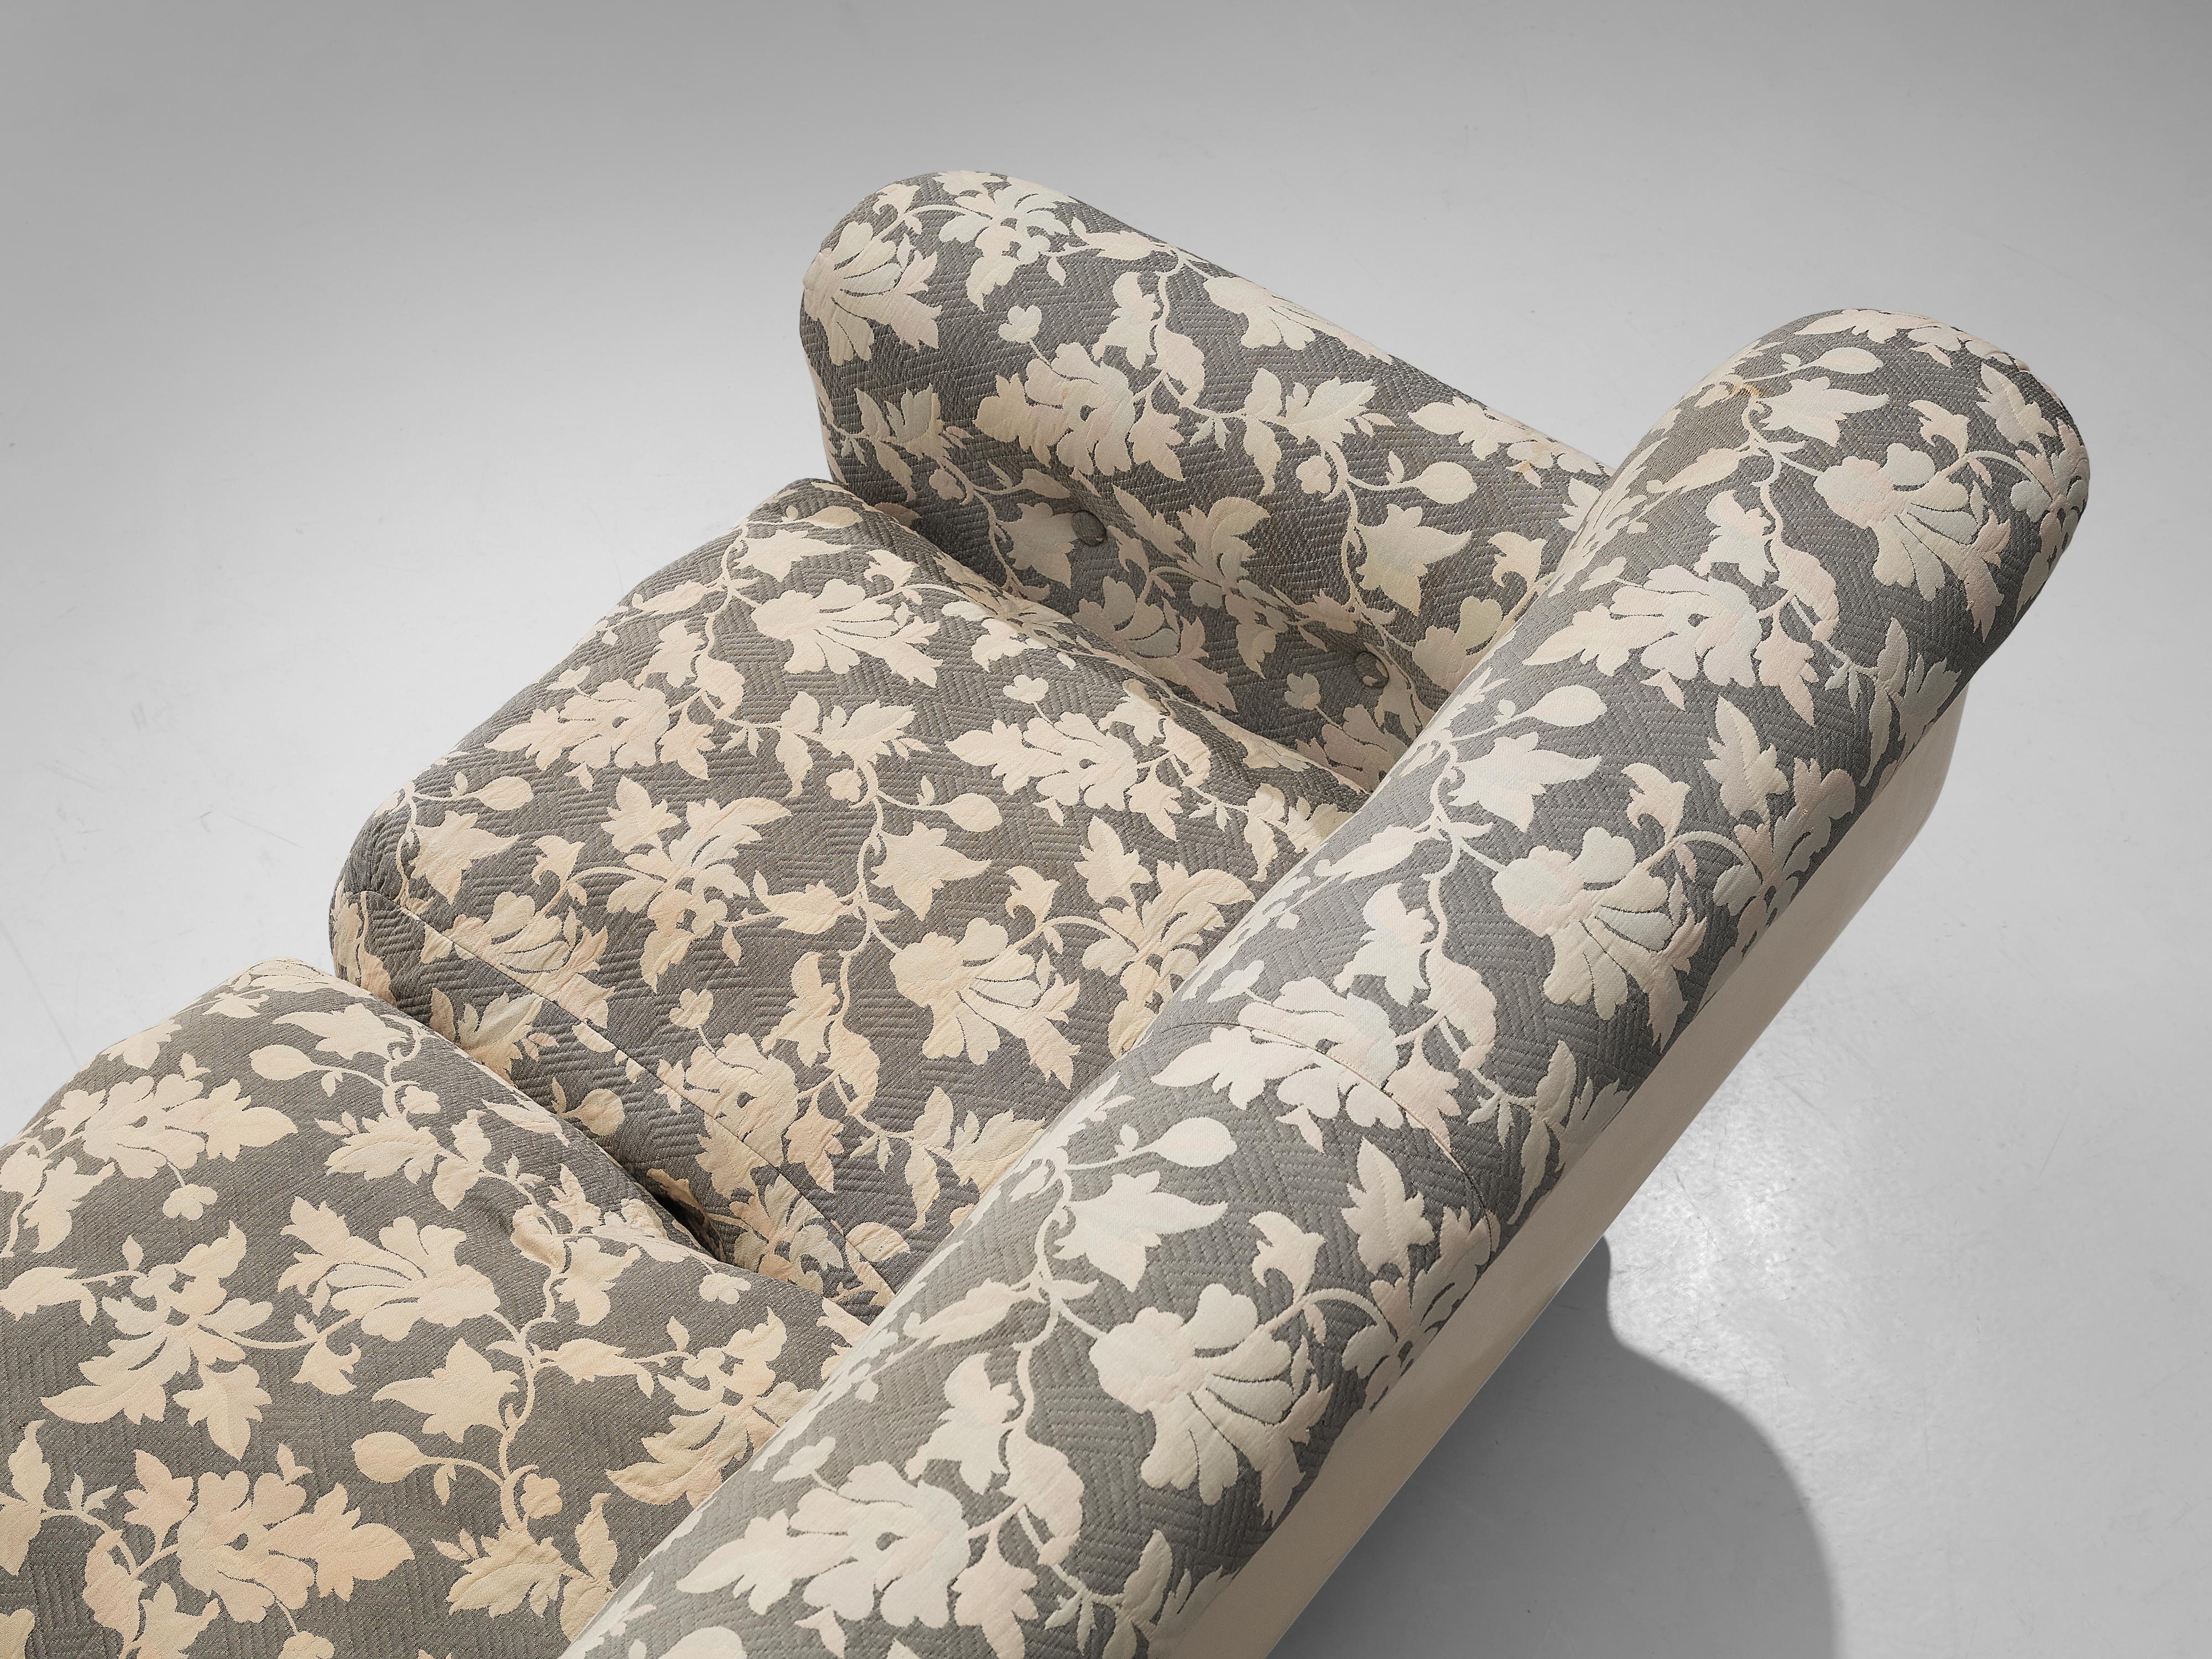 Fabric Studio Tecnico for Mobilquattro ‘Delta 699’ Sofa in Floral Upholstery For Sale